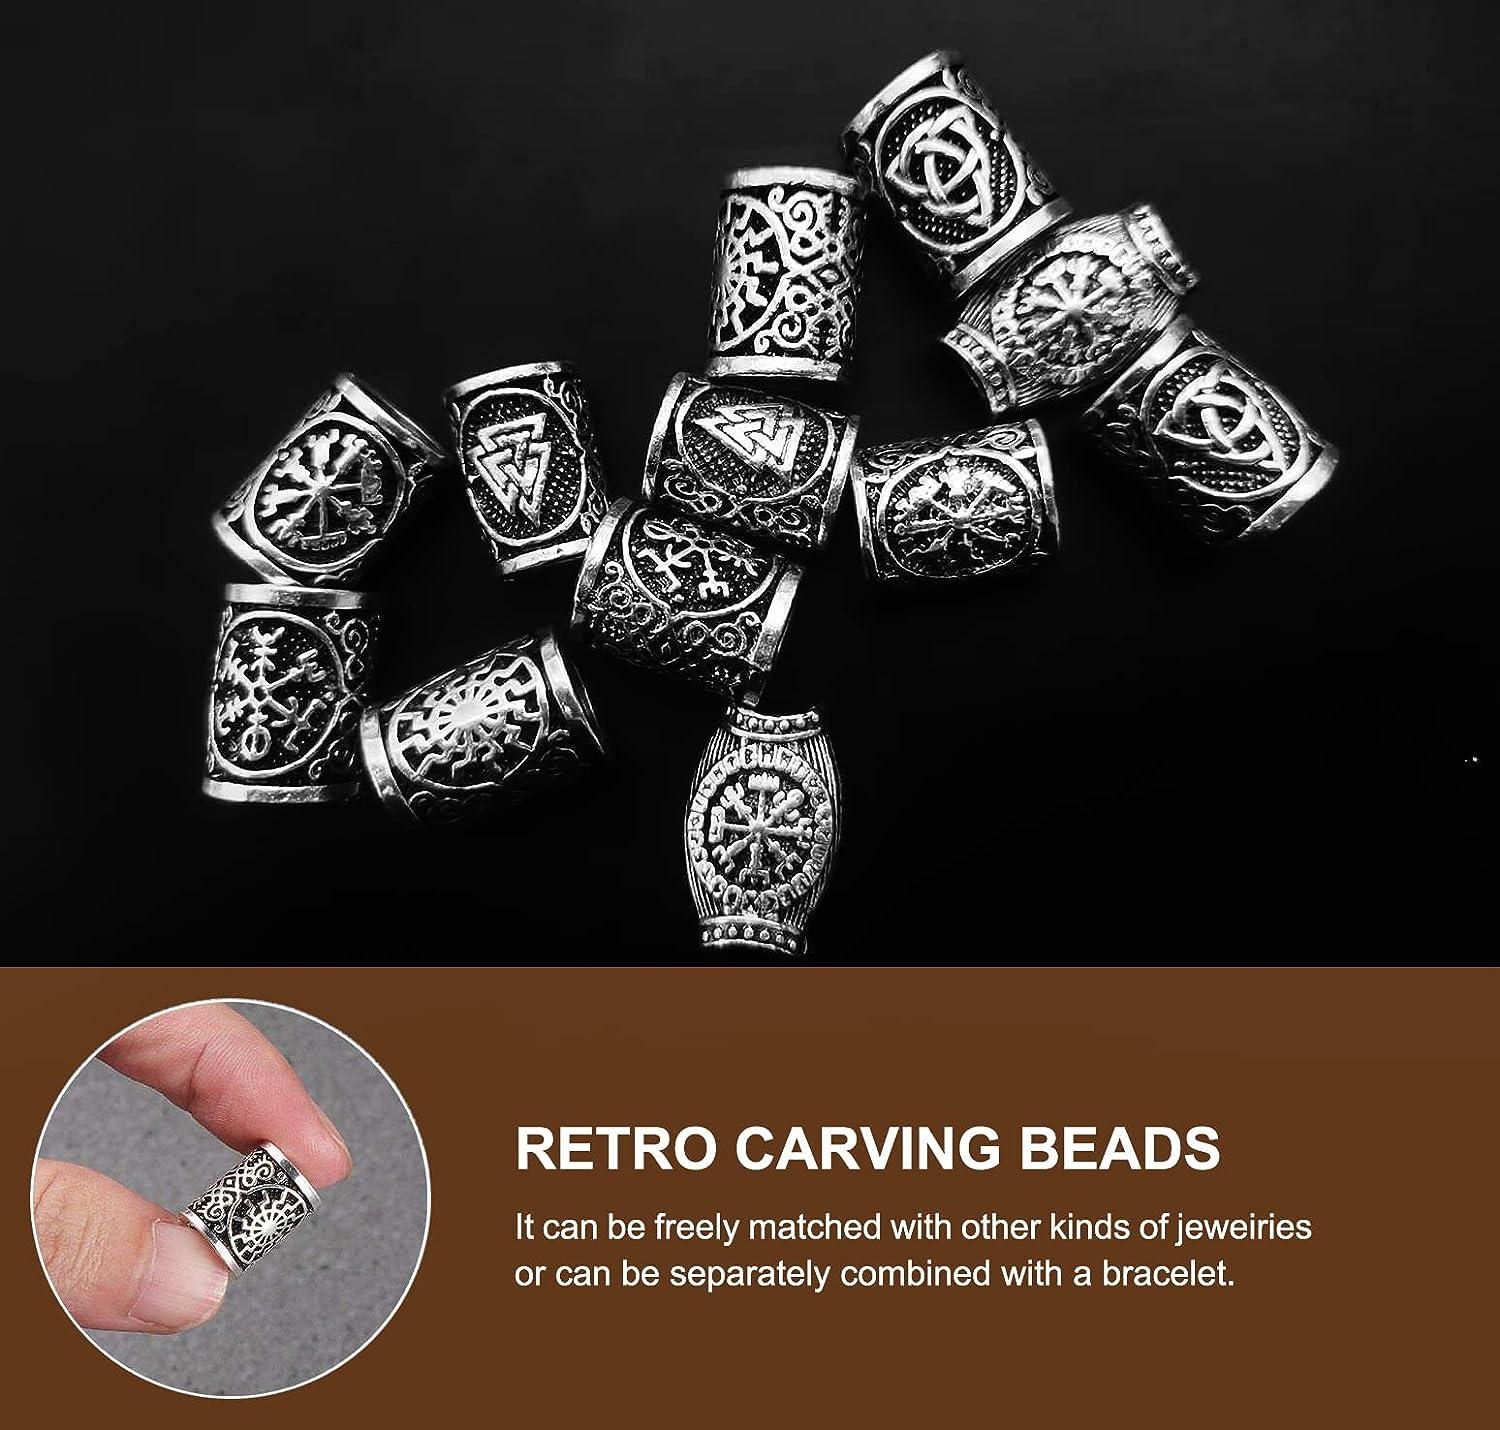 Beard/Hair Bead, Silver with Runes